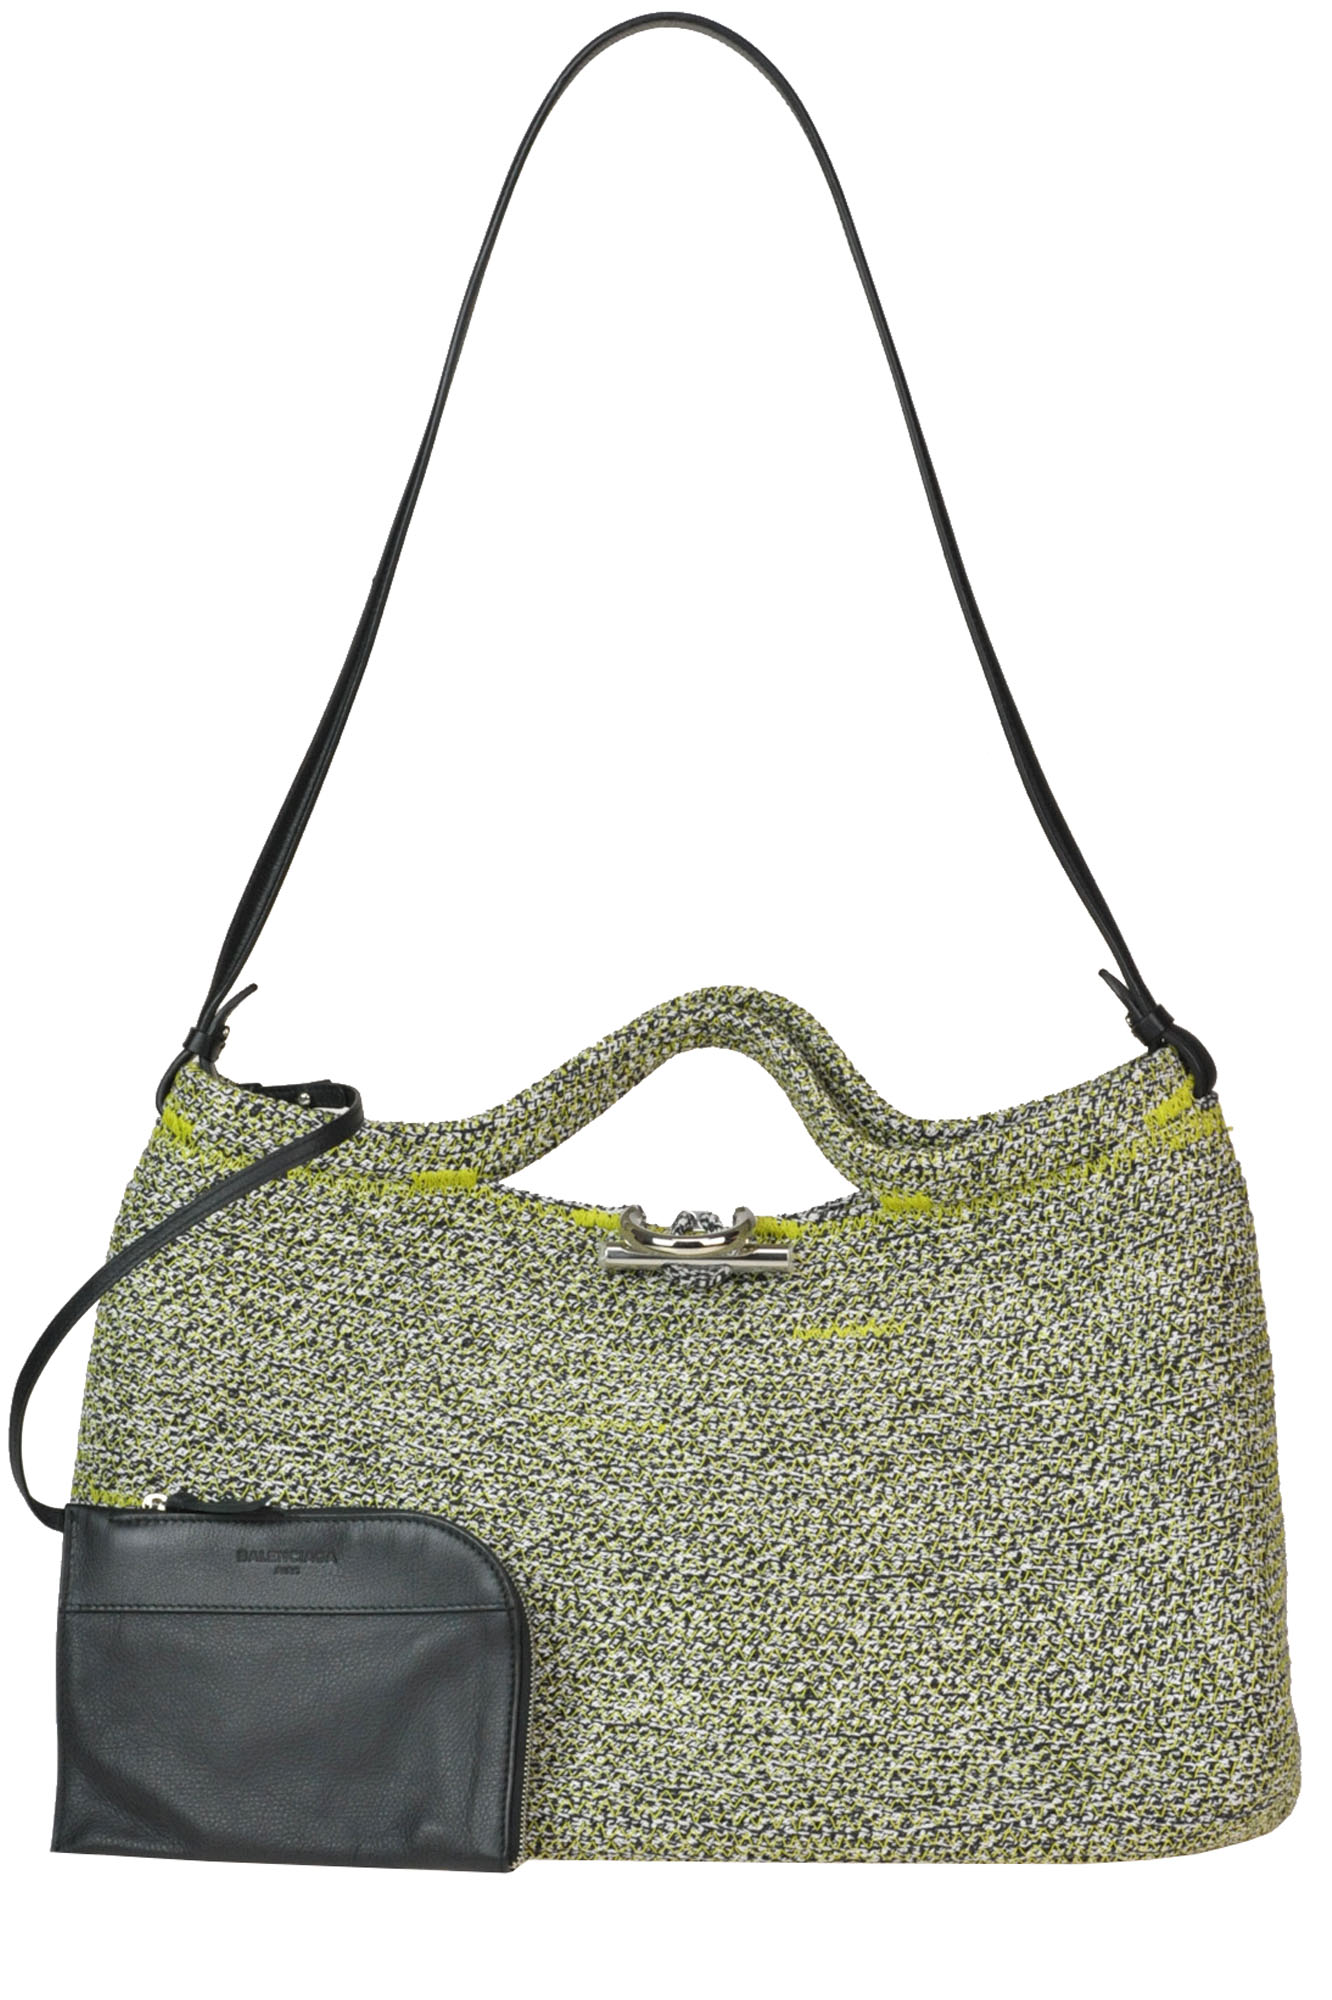 Balenciaga 'zigzagger' Woven Fabric Bag In Multicoloured